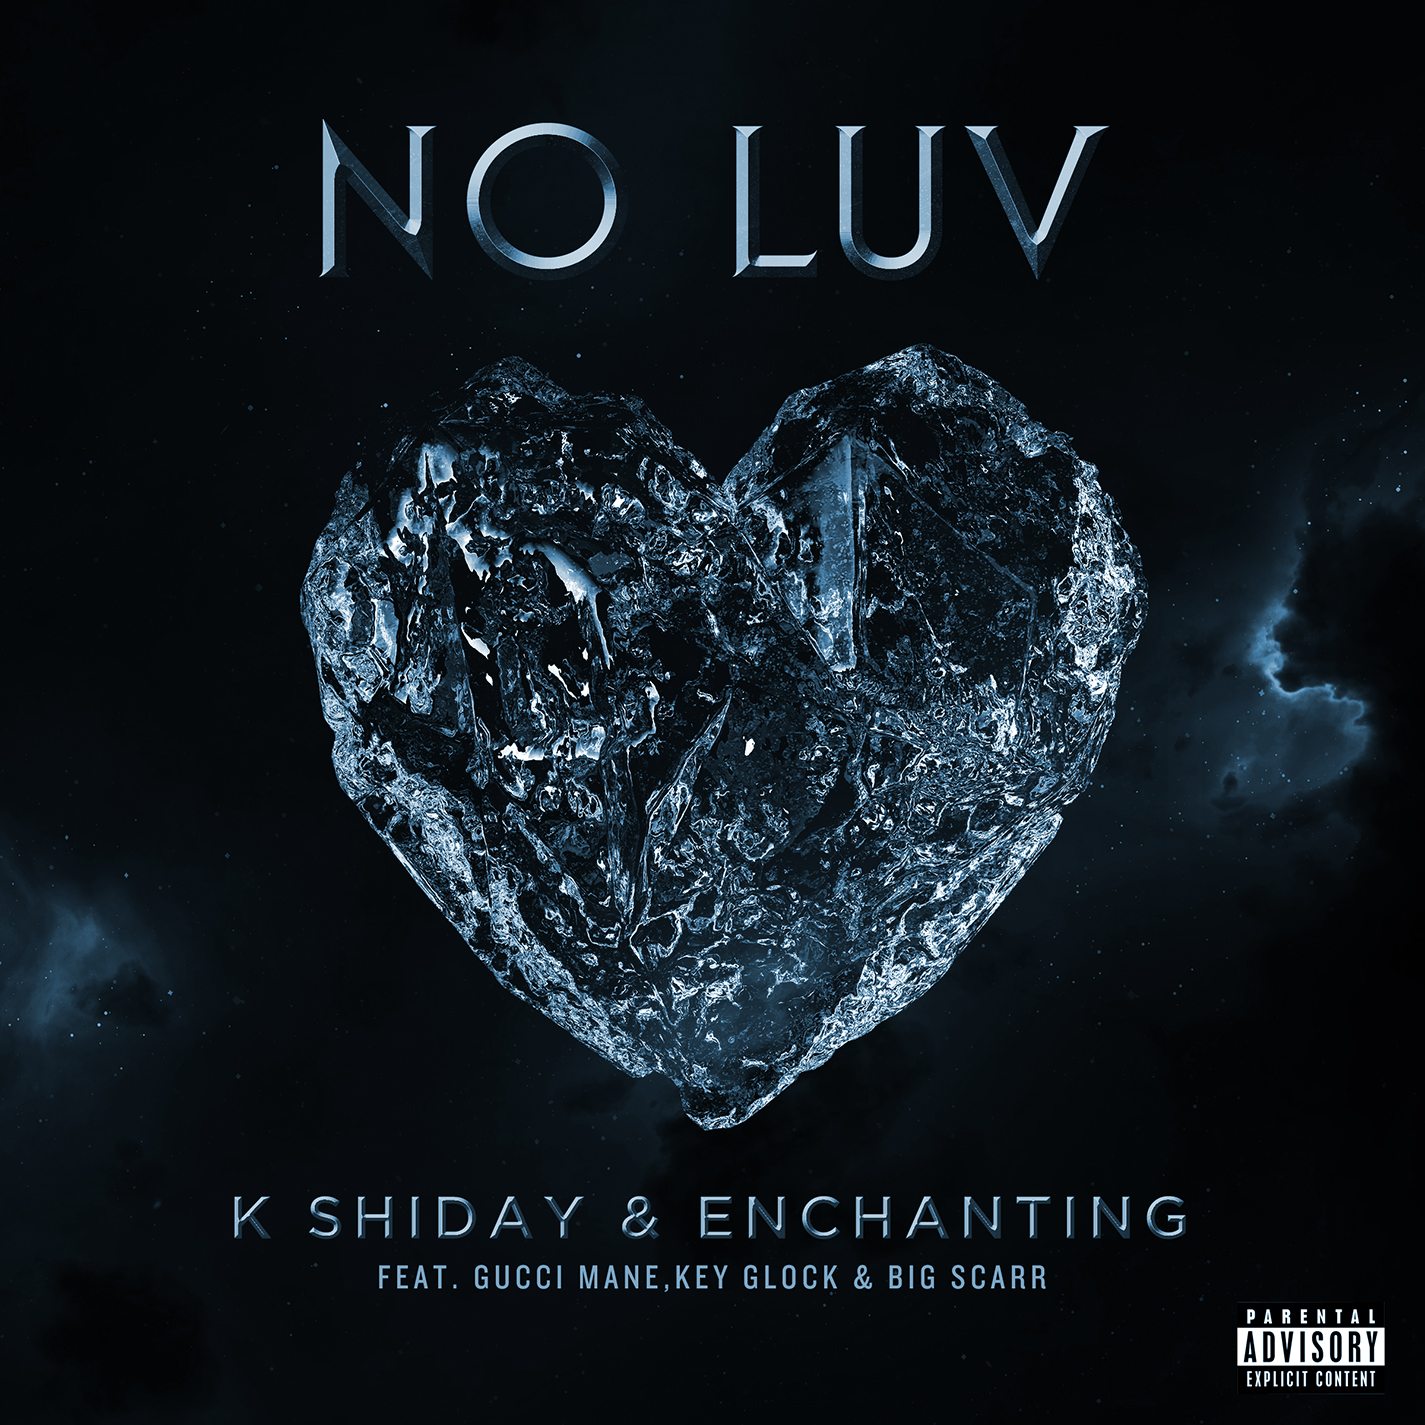 No Luv (K Shiday & Enchanting feat. Gucci Mane, Big Scarr & Key Glock) album image